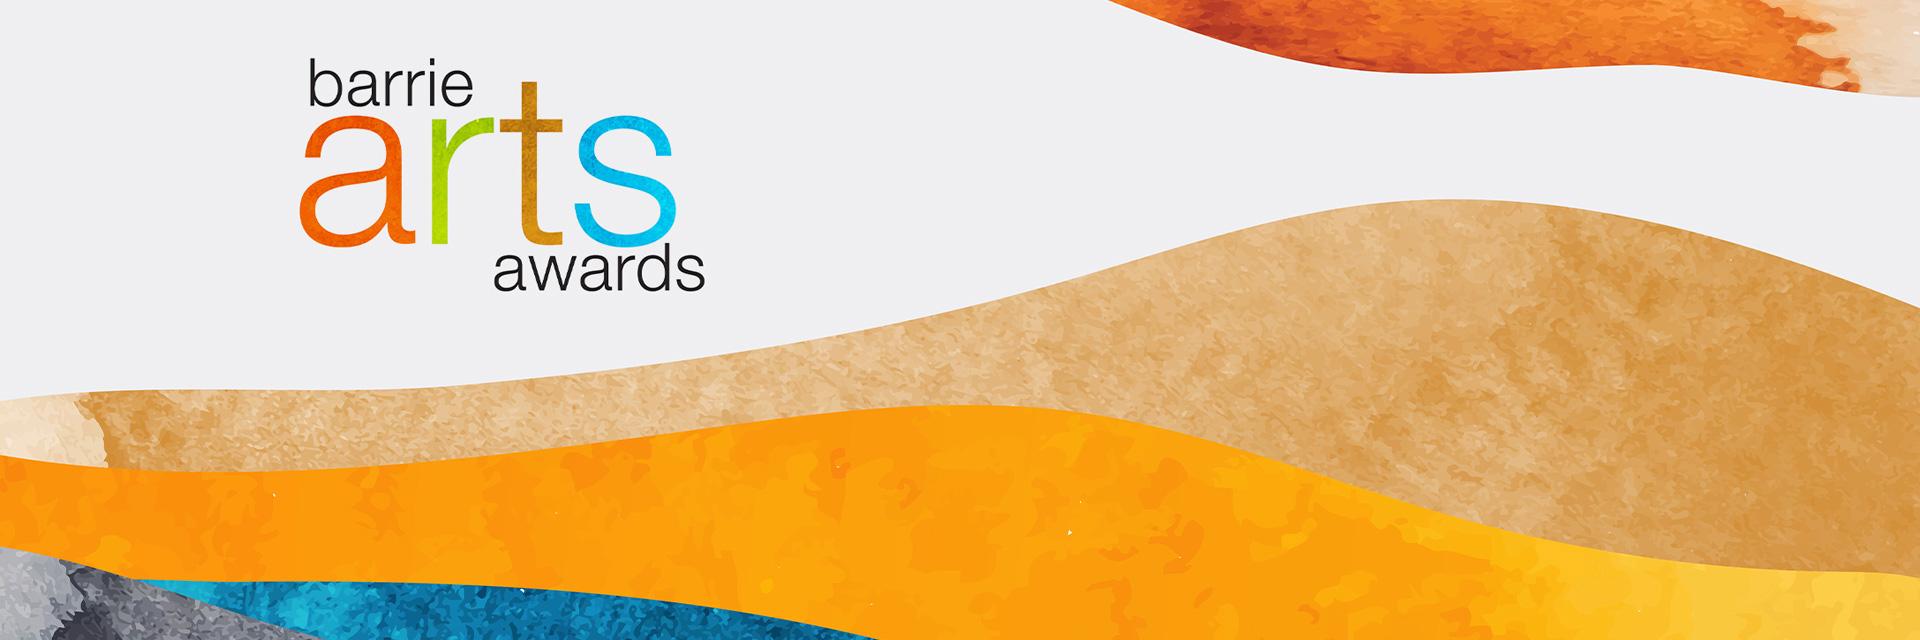 Barrie Arts Awards logo